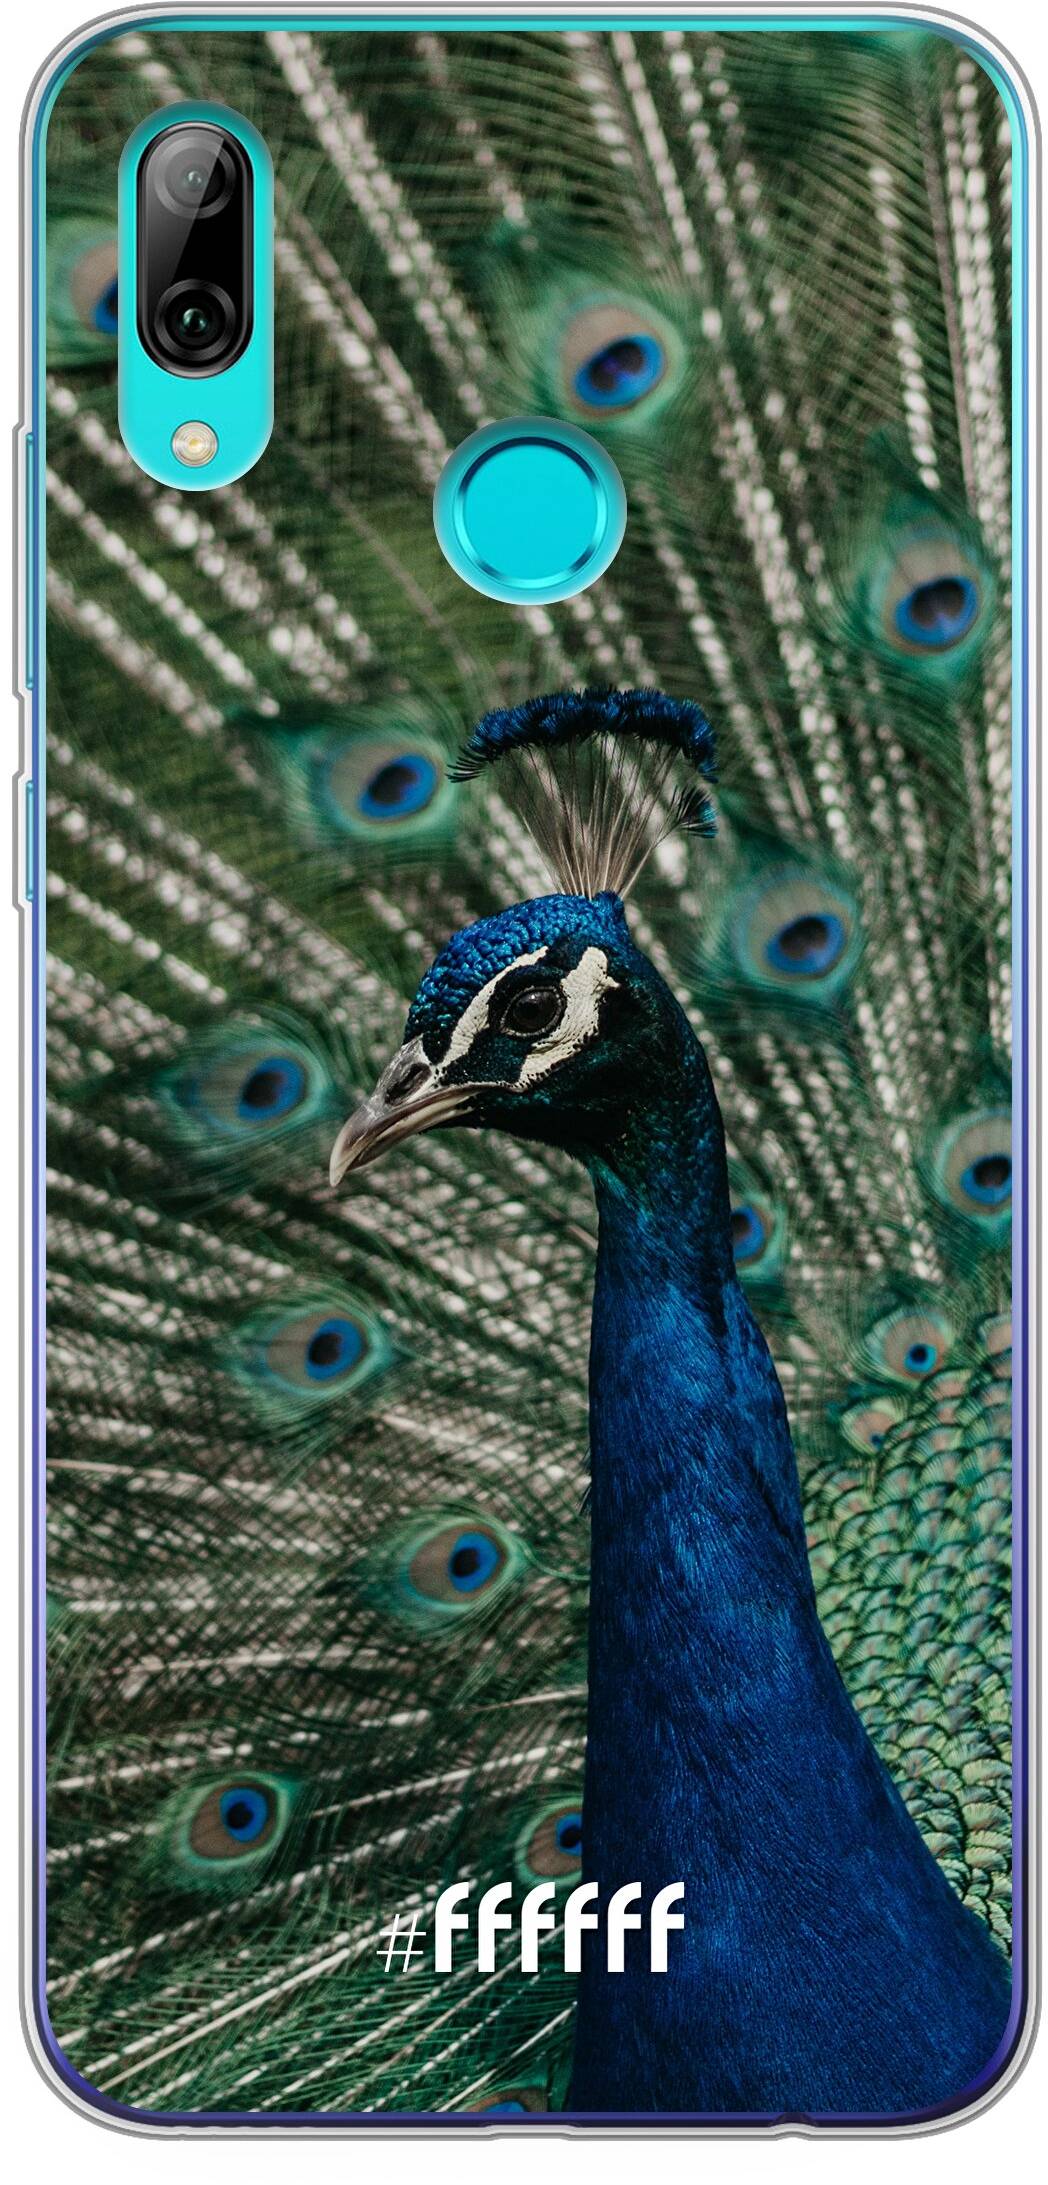 Peacock P Smart (2019)